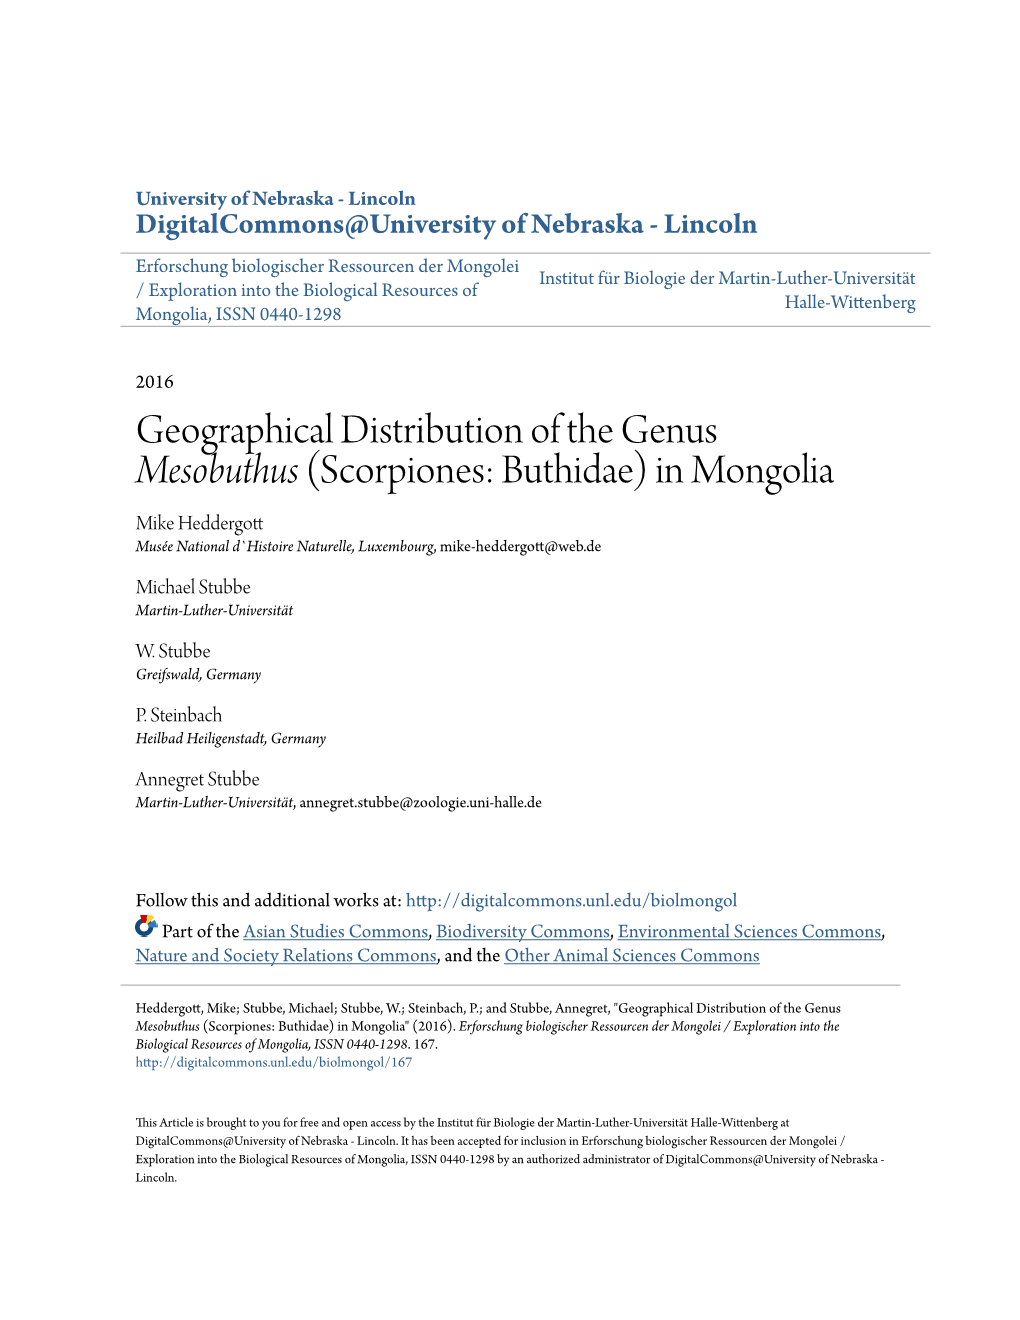 Scorpiones: Buthidae) in Mongolia Mike Heddergott Musée National D`Histoire Naturelle, Luxembourg, Mike-Heddergott@Web.De